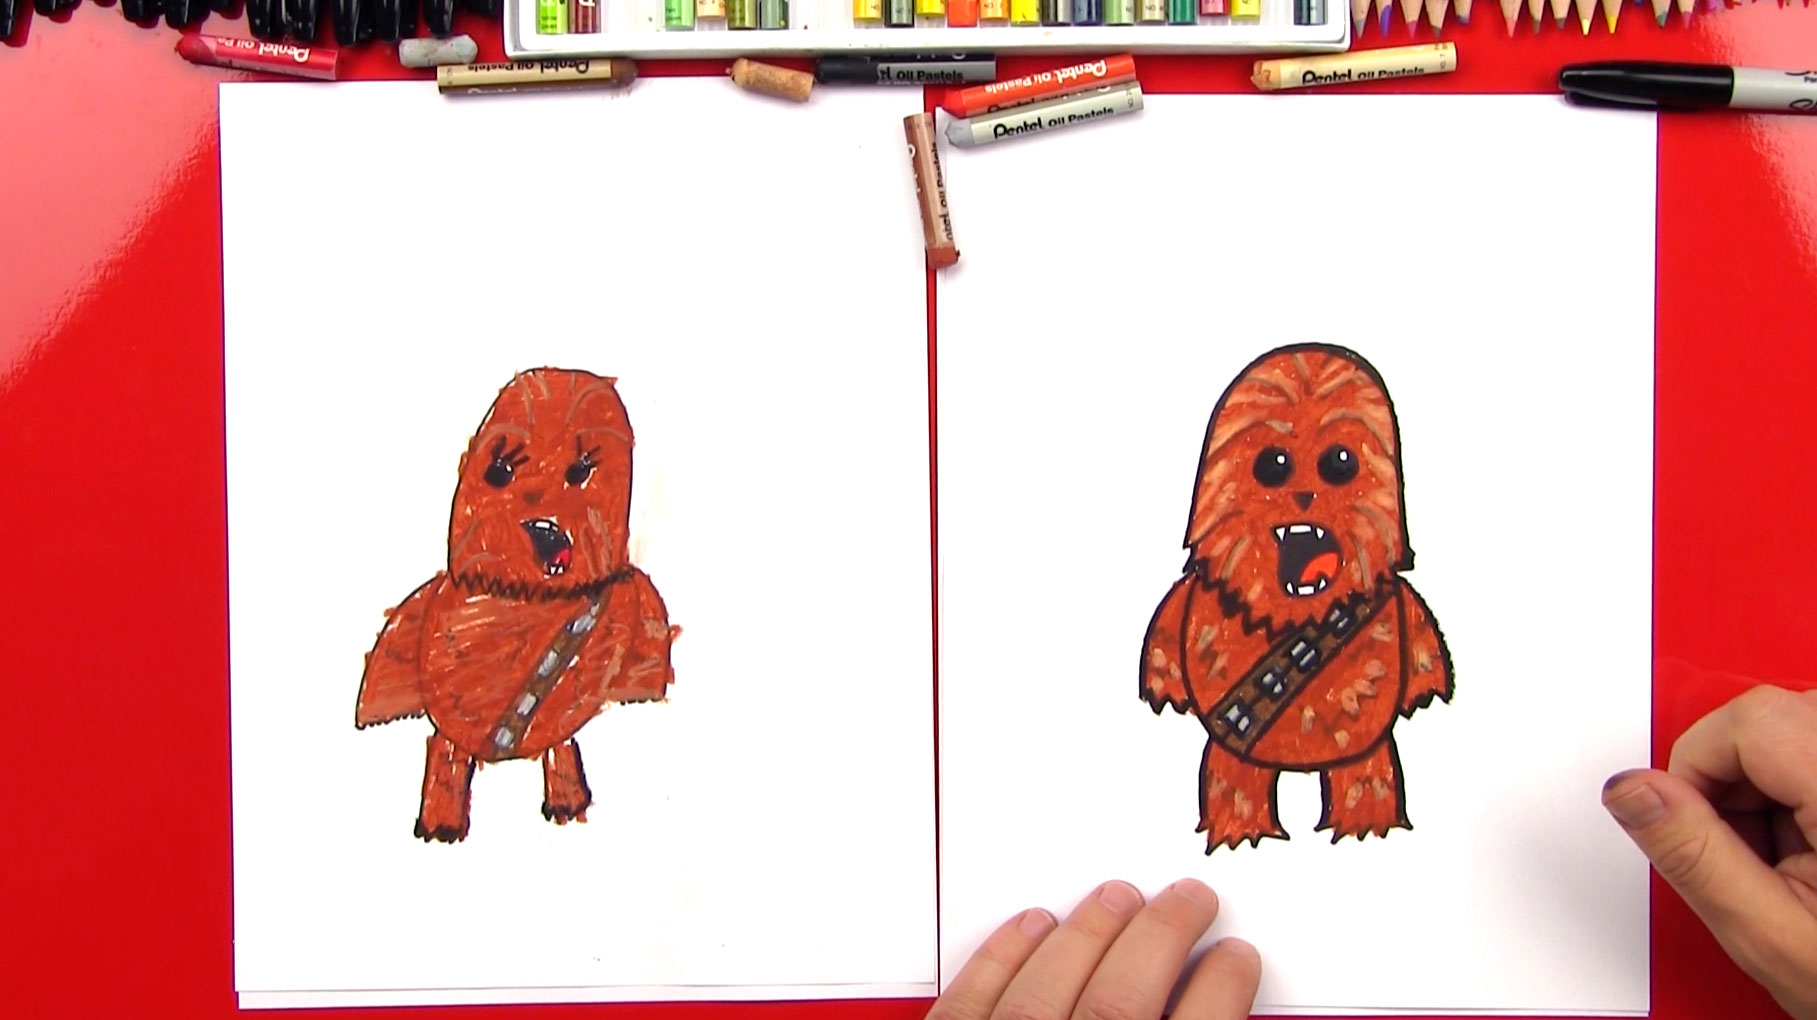 How To Draw A Cartoon Chewbacca - Art For Kids Hub - 1817 x 1020 jpeg 171kB